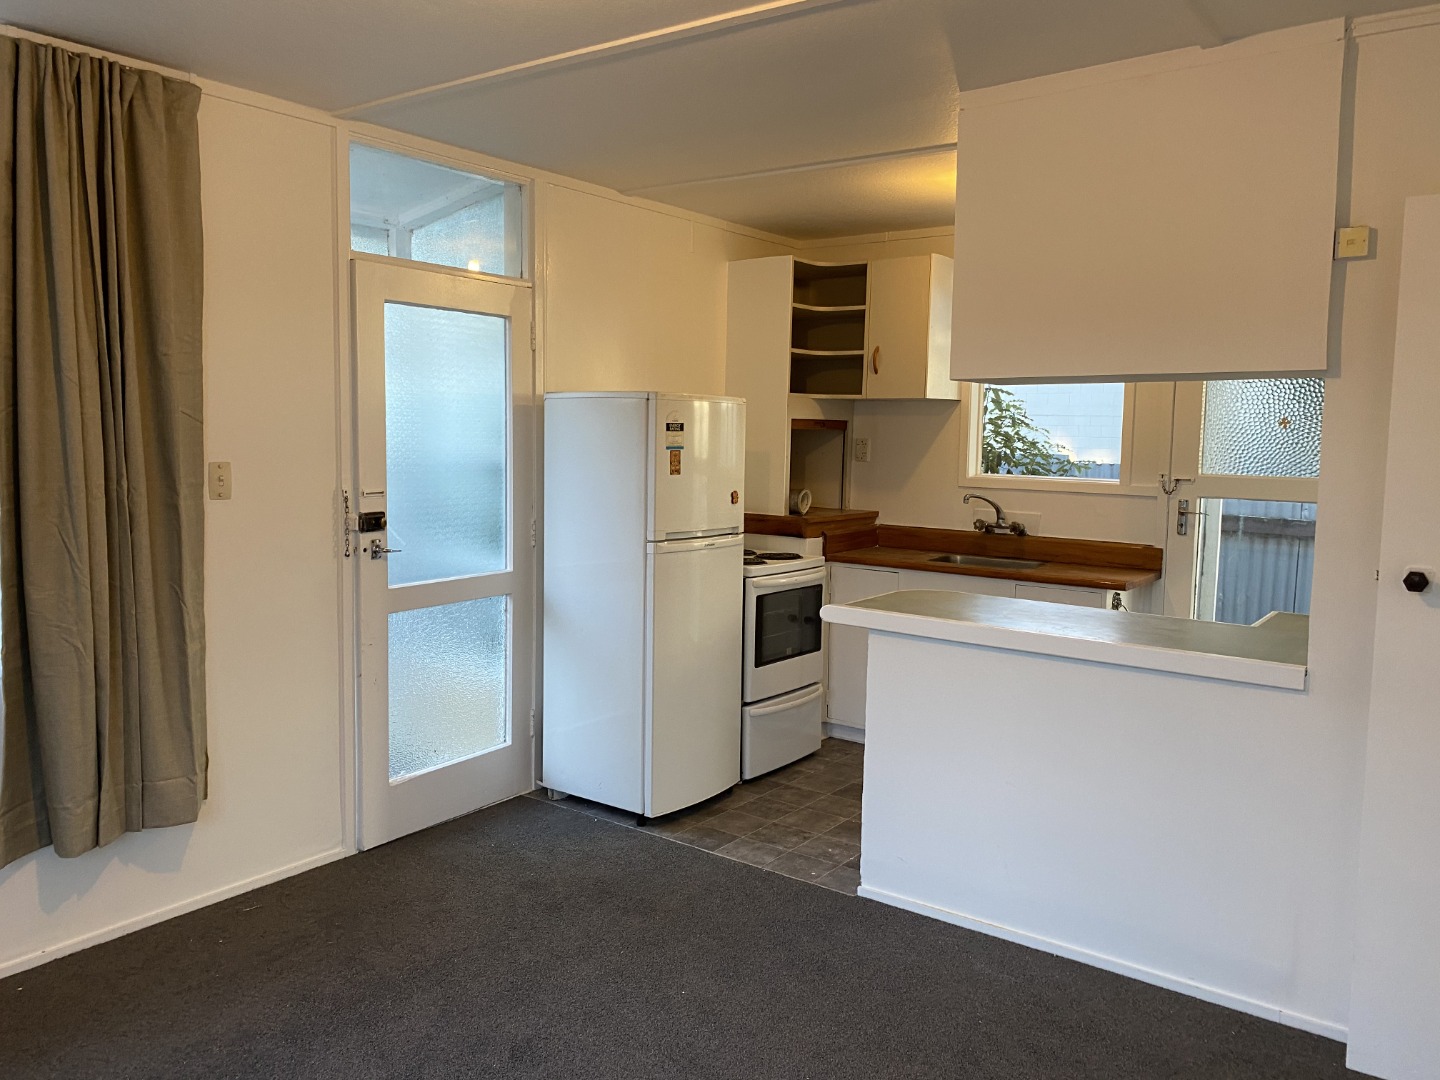 Real Estate For Rent Houses & Apartments : 2 Bedroom unit, Upper Hutt, Wellington